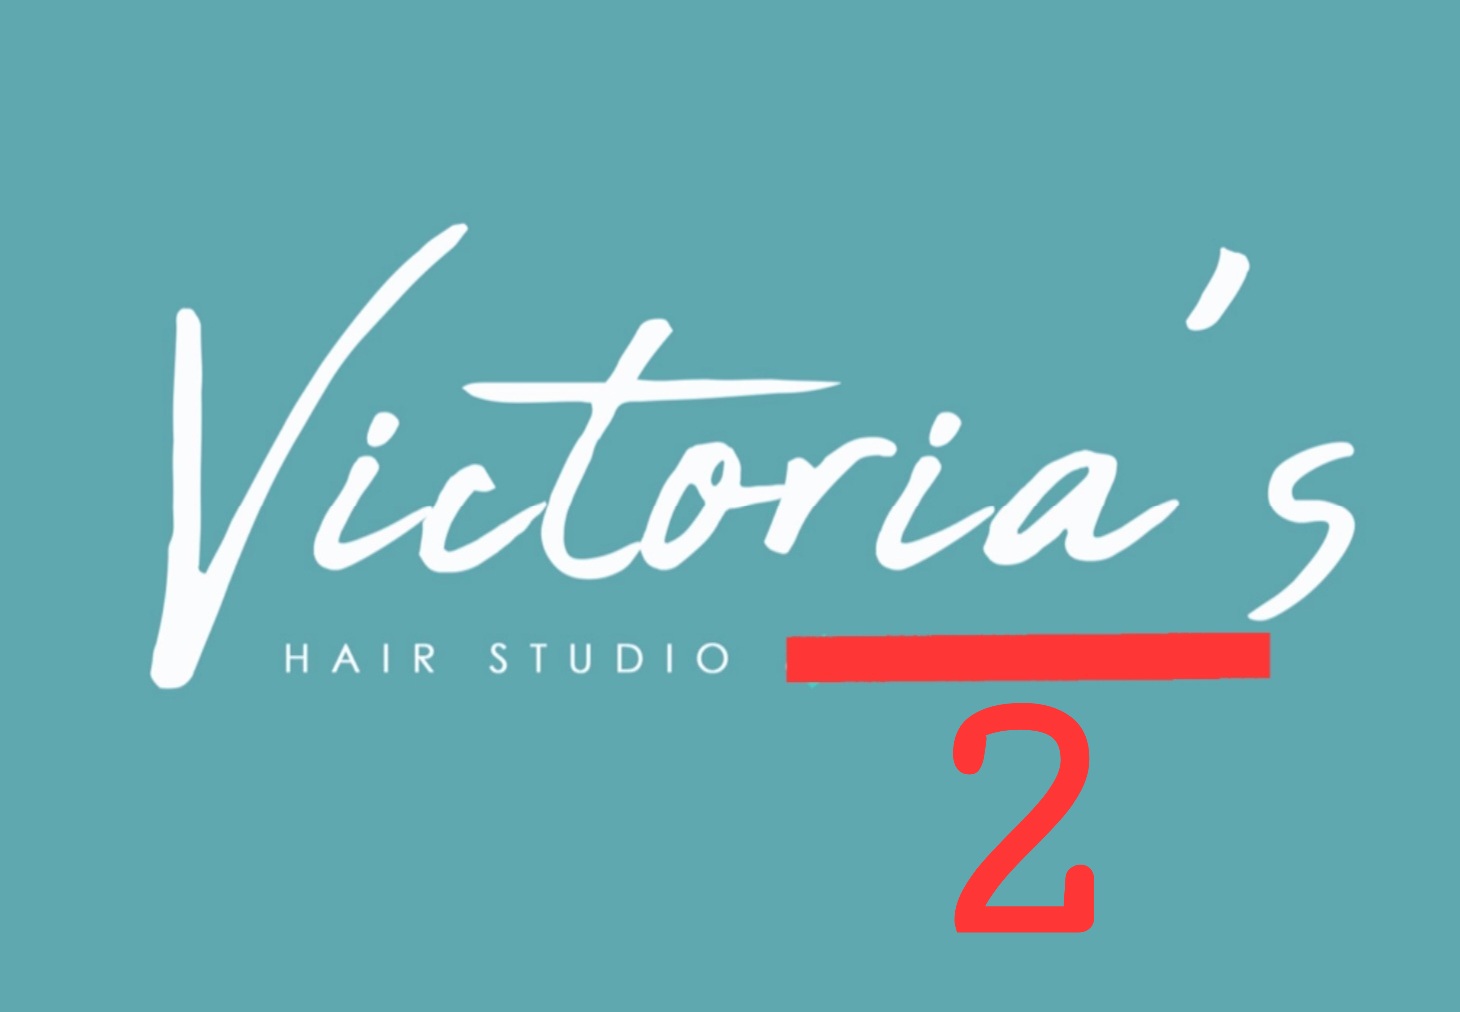 Victoria's Hair Studio 2 in Salon and Spa Galleria Victoria McClanahan 4300 Boat Club Rd, Lake Worth Texas 76135